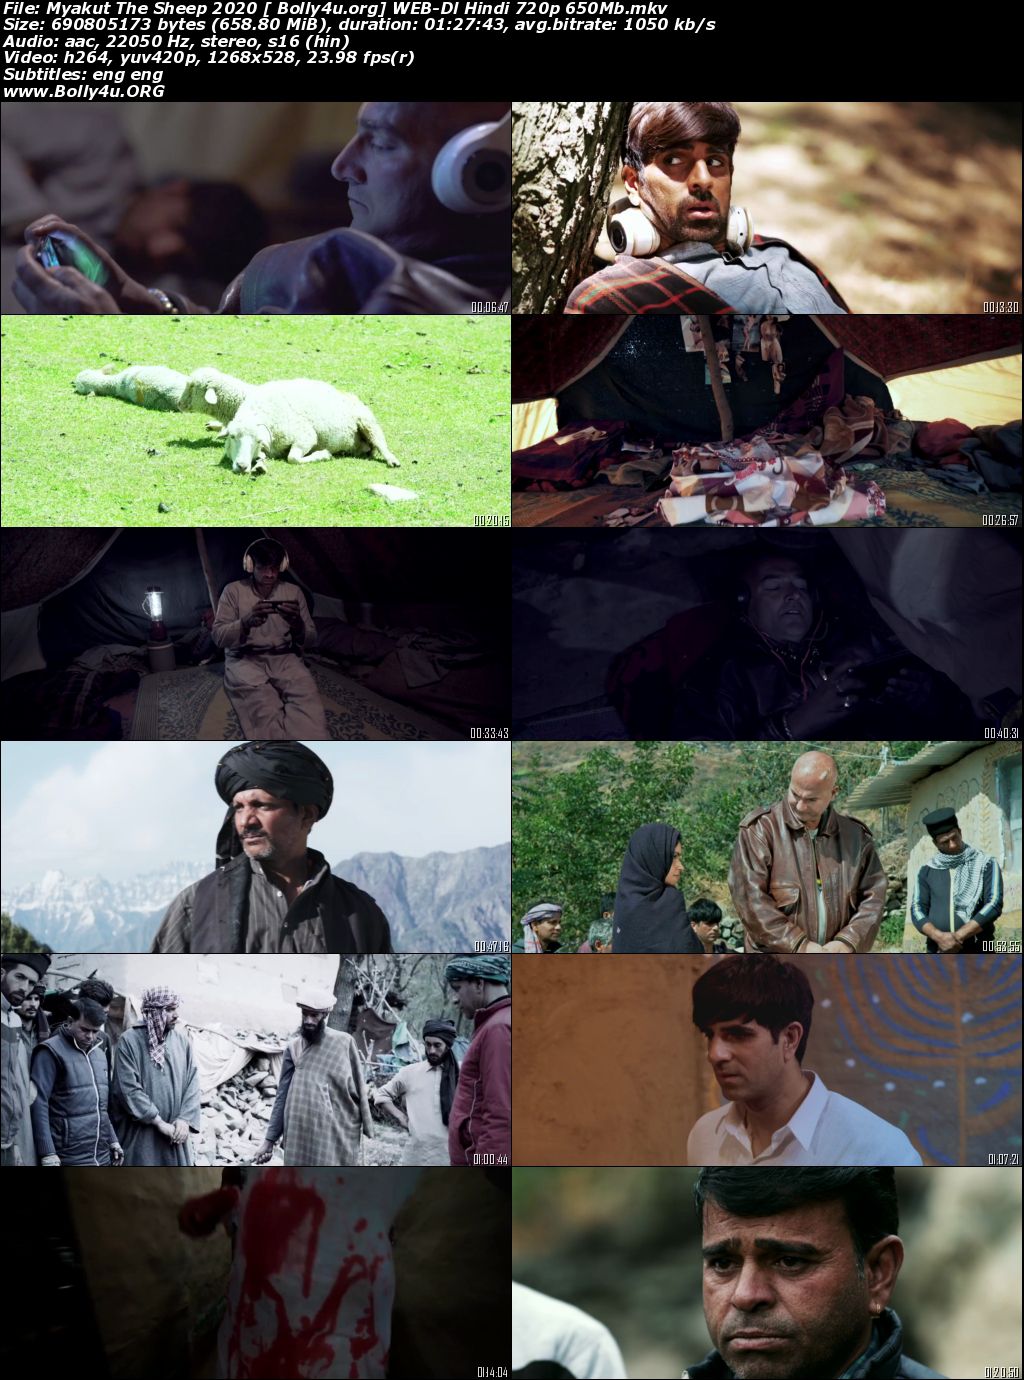 Myakut The Sheep 2020 WEB-DL 280Mb Hindi Movie Download 480p